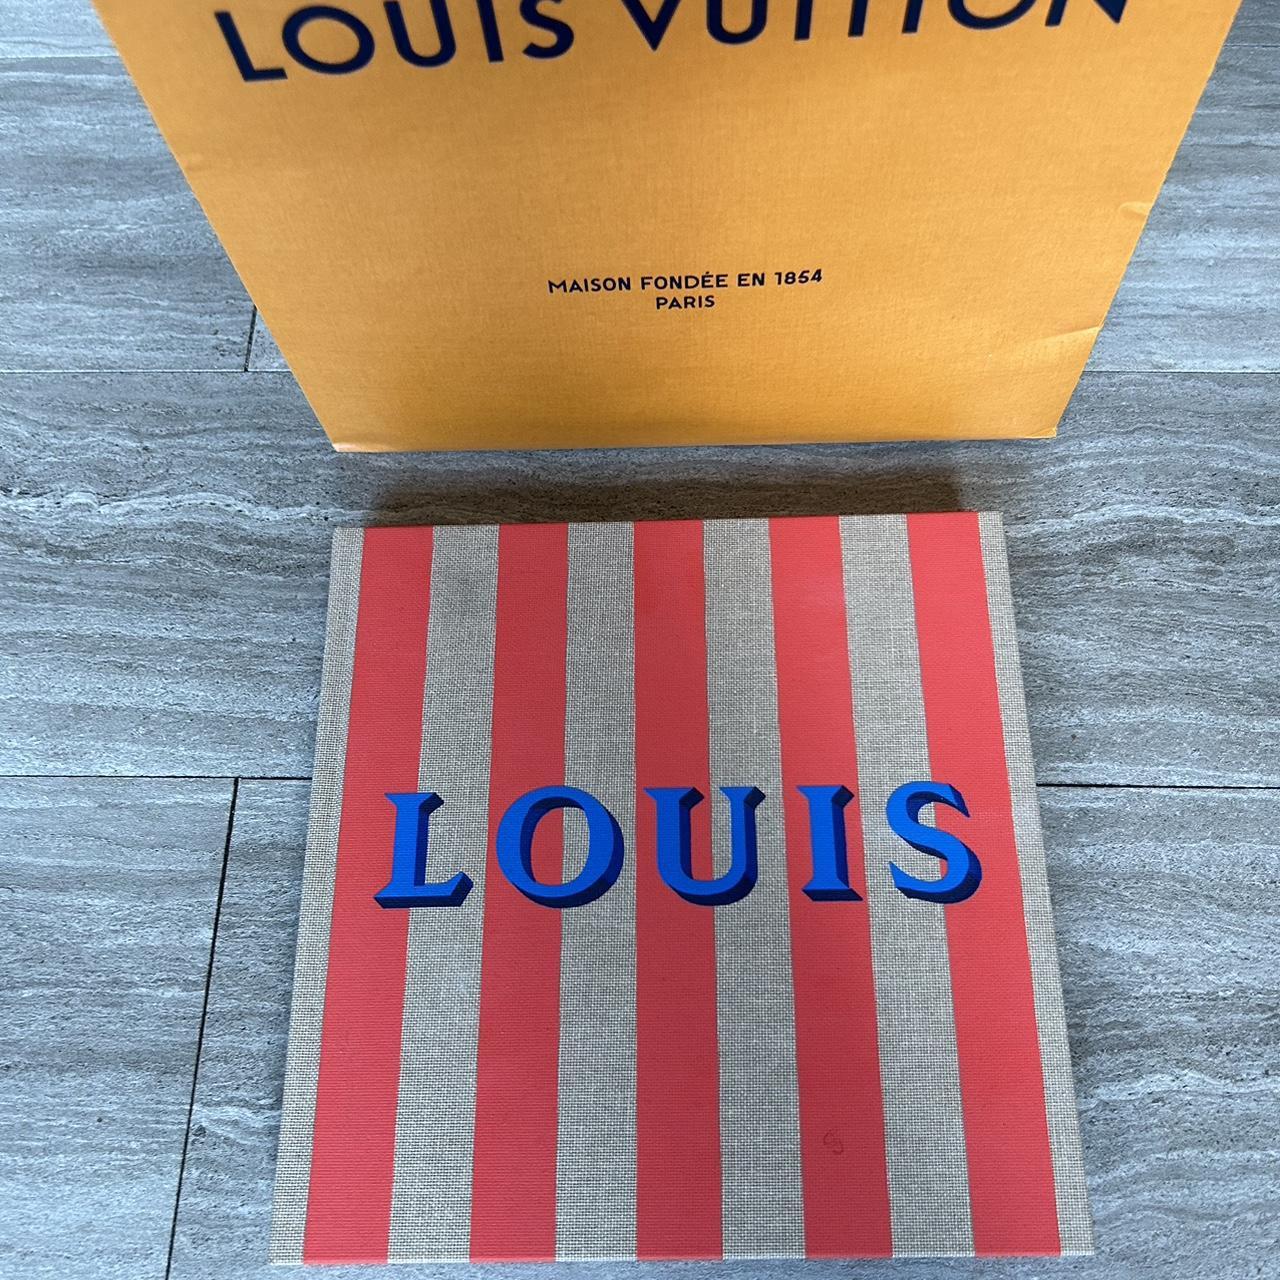 Shop — LV Trunks  Louis vuitton perfume, Louis vuitton book